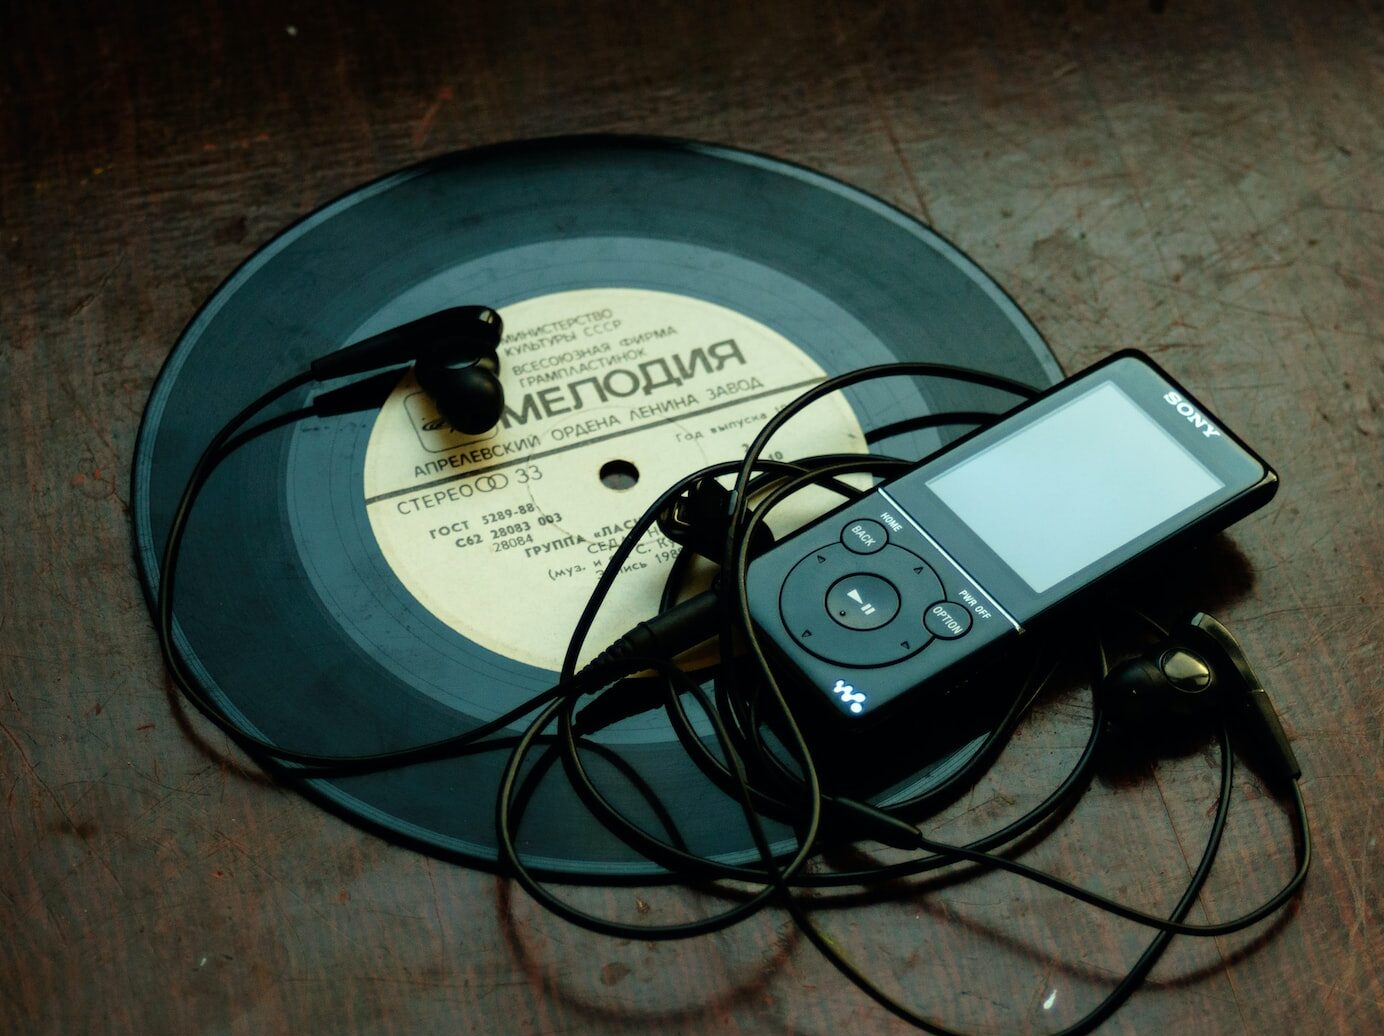 in-ear headphones plugged in black Sony Walkman on vinyl record